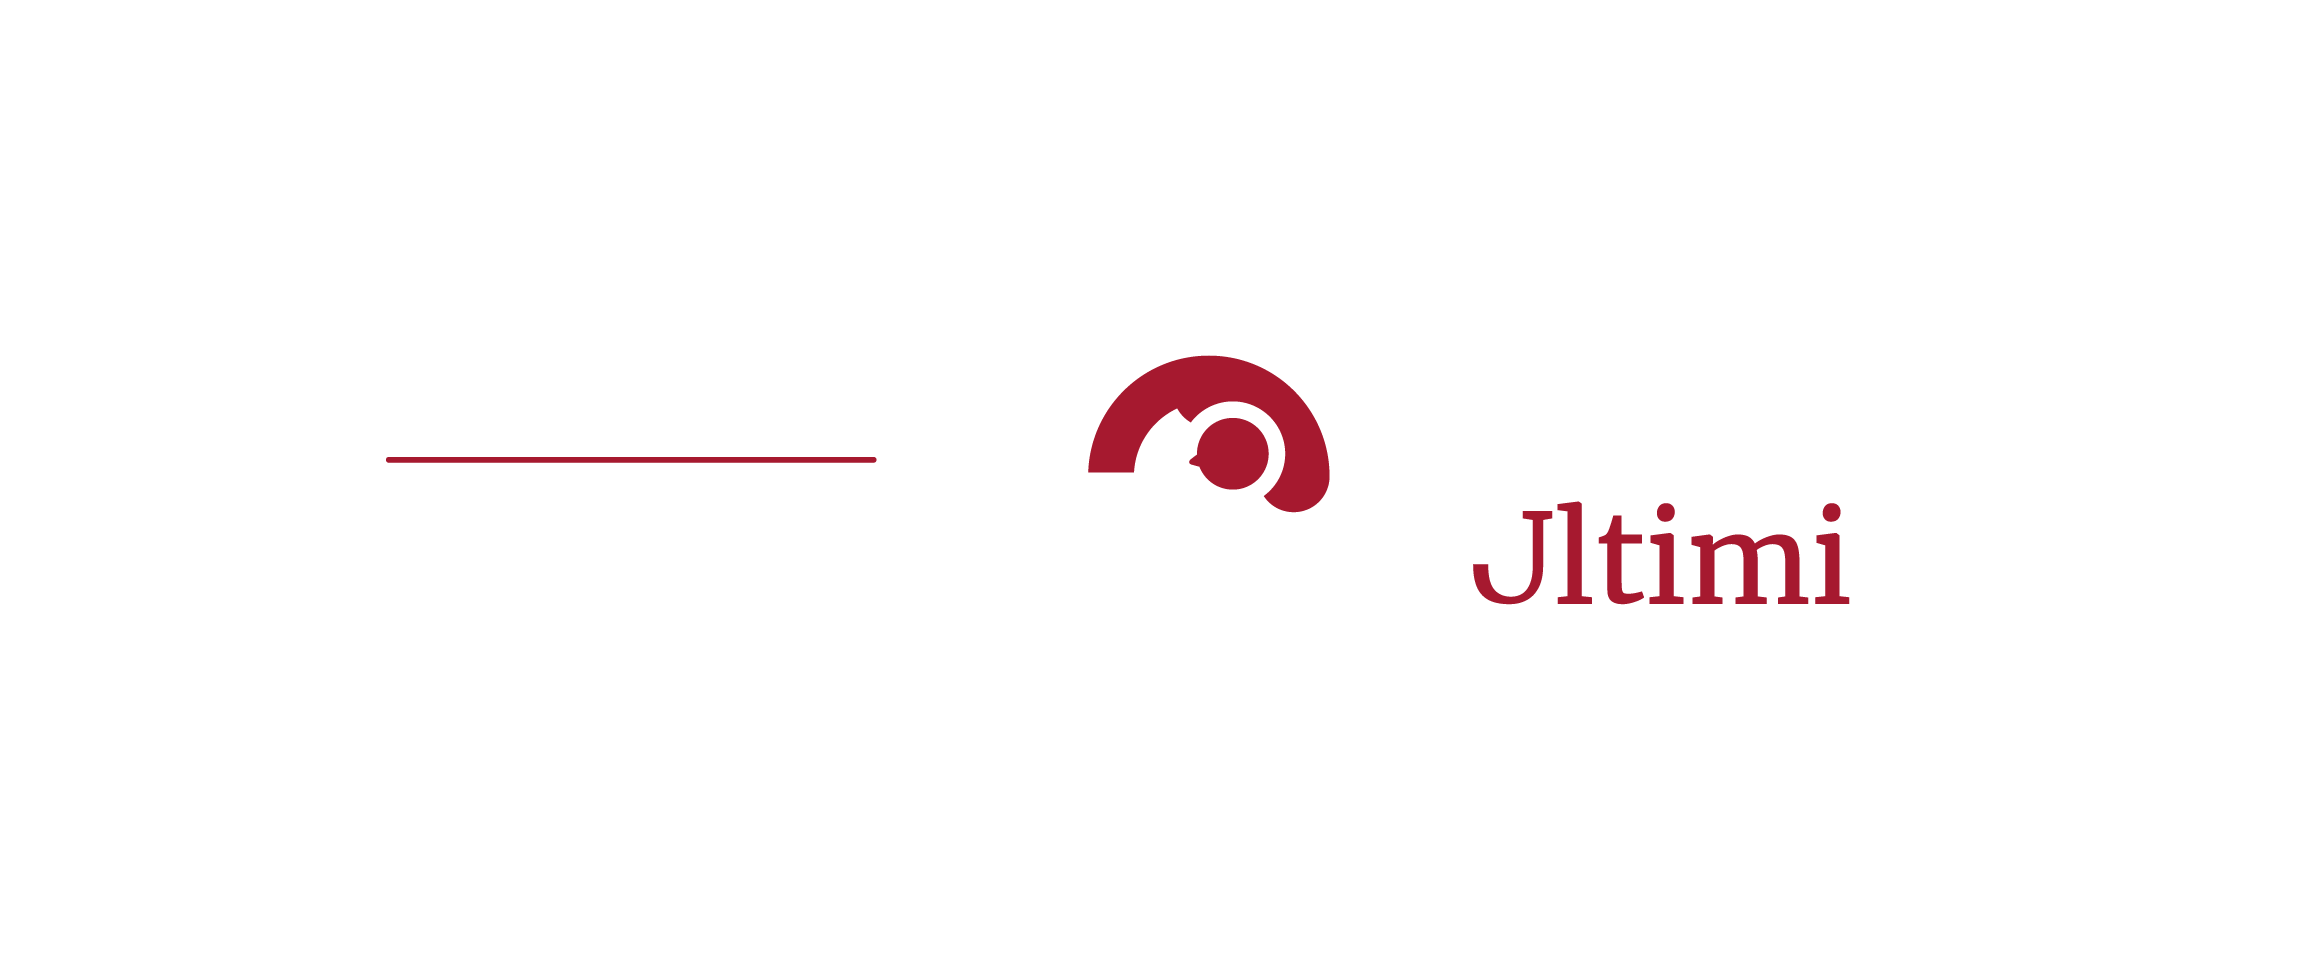 https://www.lagiustiziadegliultimi.it/wp-content/uploads/2020/03/Logo_LGDU_BIANCO-02.png